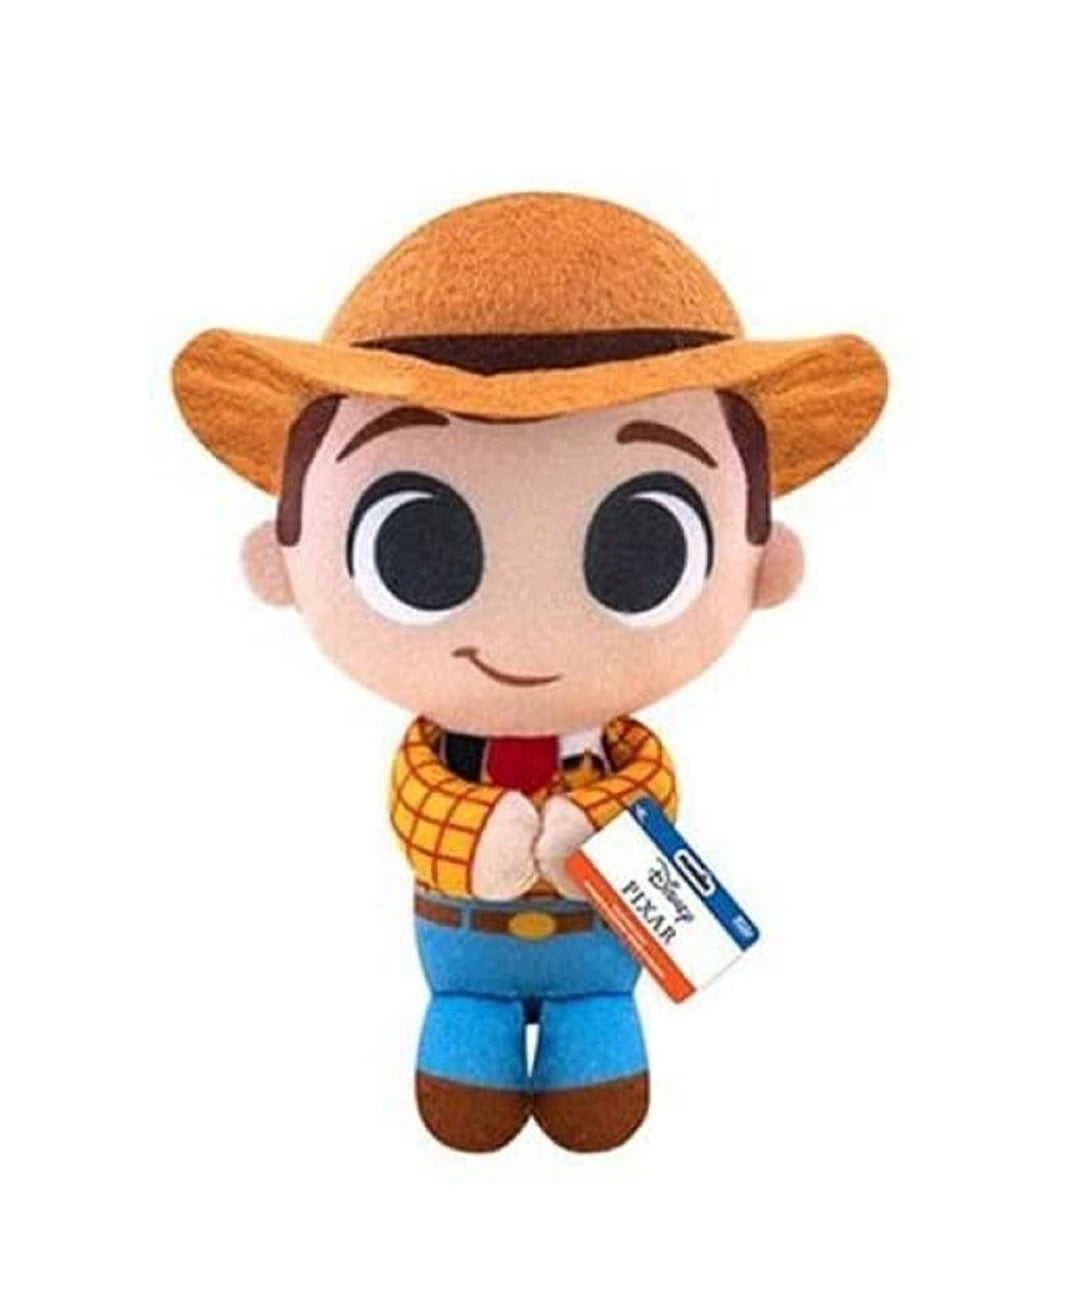 Funko Pop! Plush: Pixar Toy Story - Woody 4" Figure